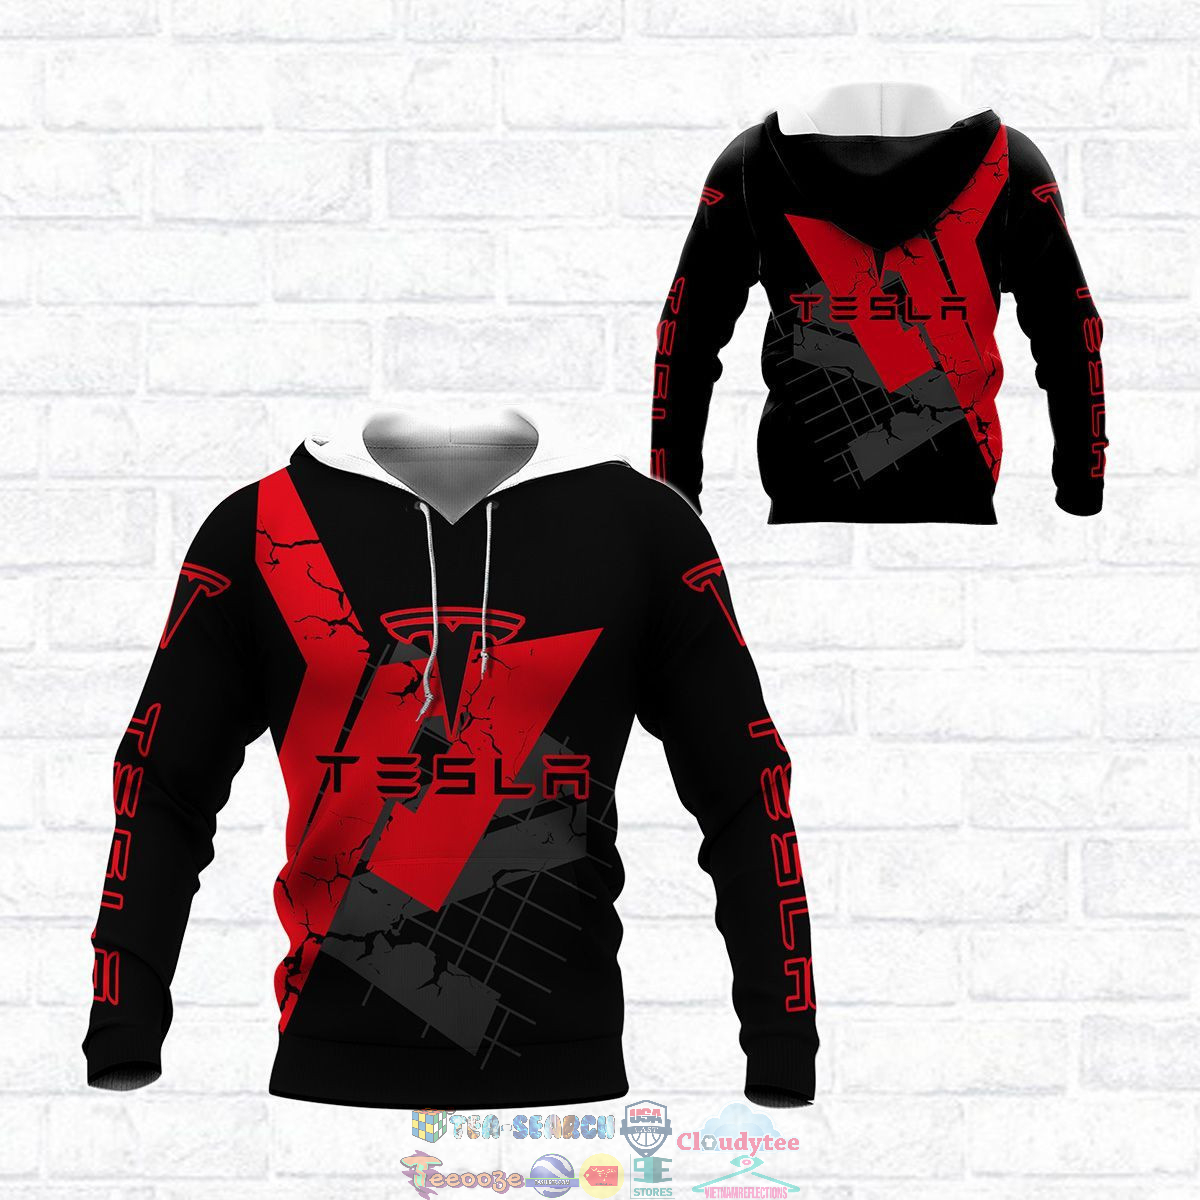 Tesla Red ver 3 3D hoodie and t-shirt- Saleoff